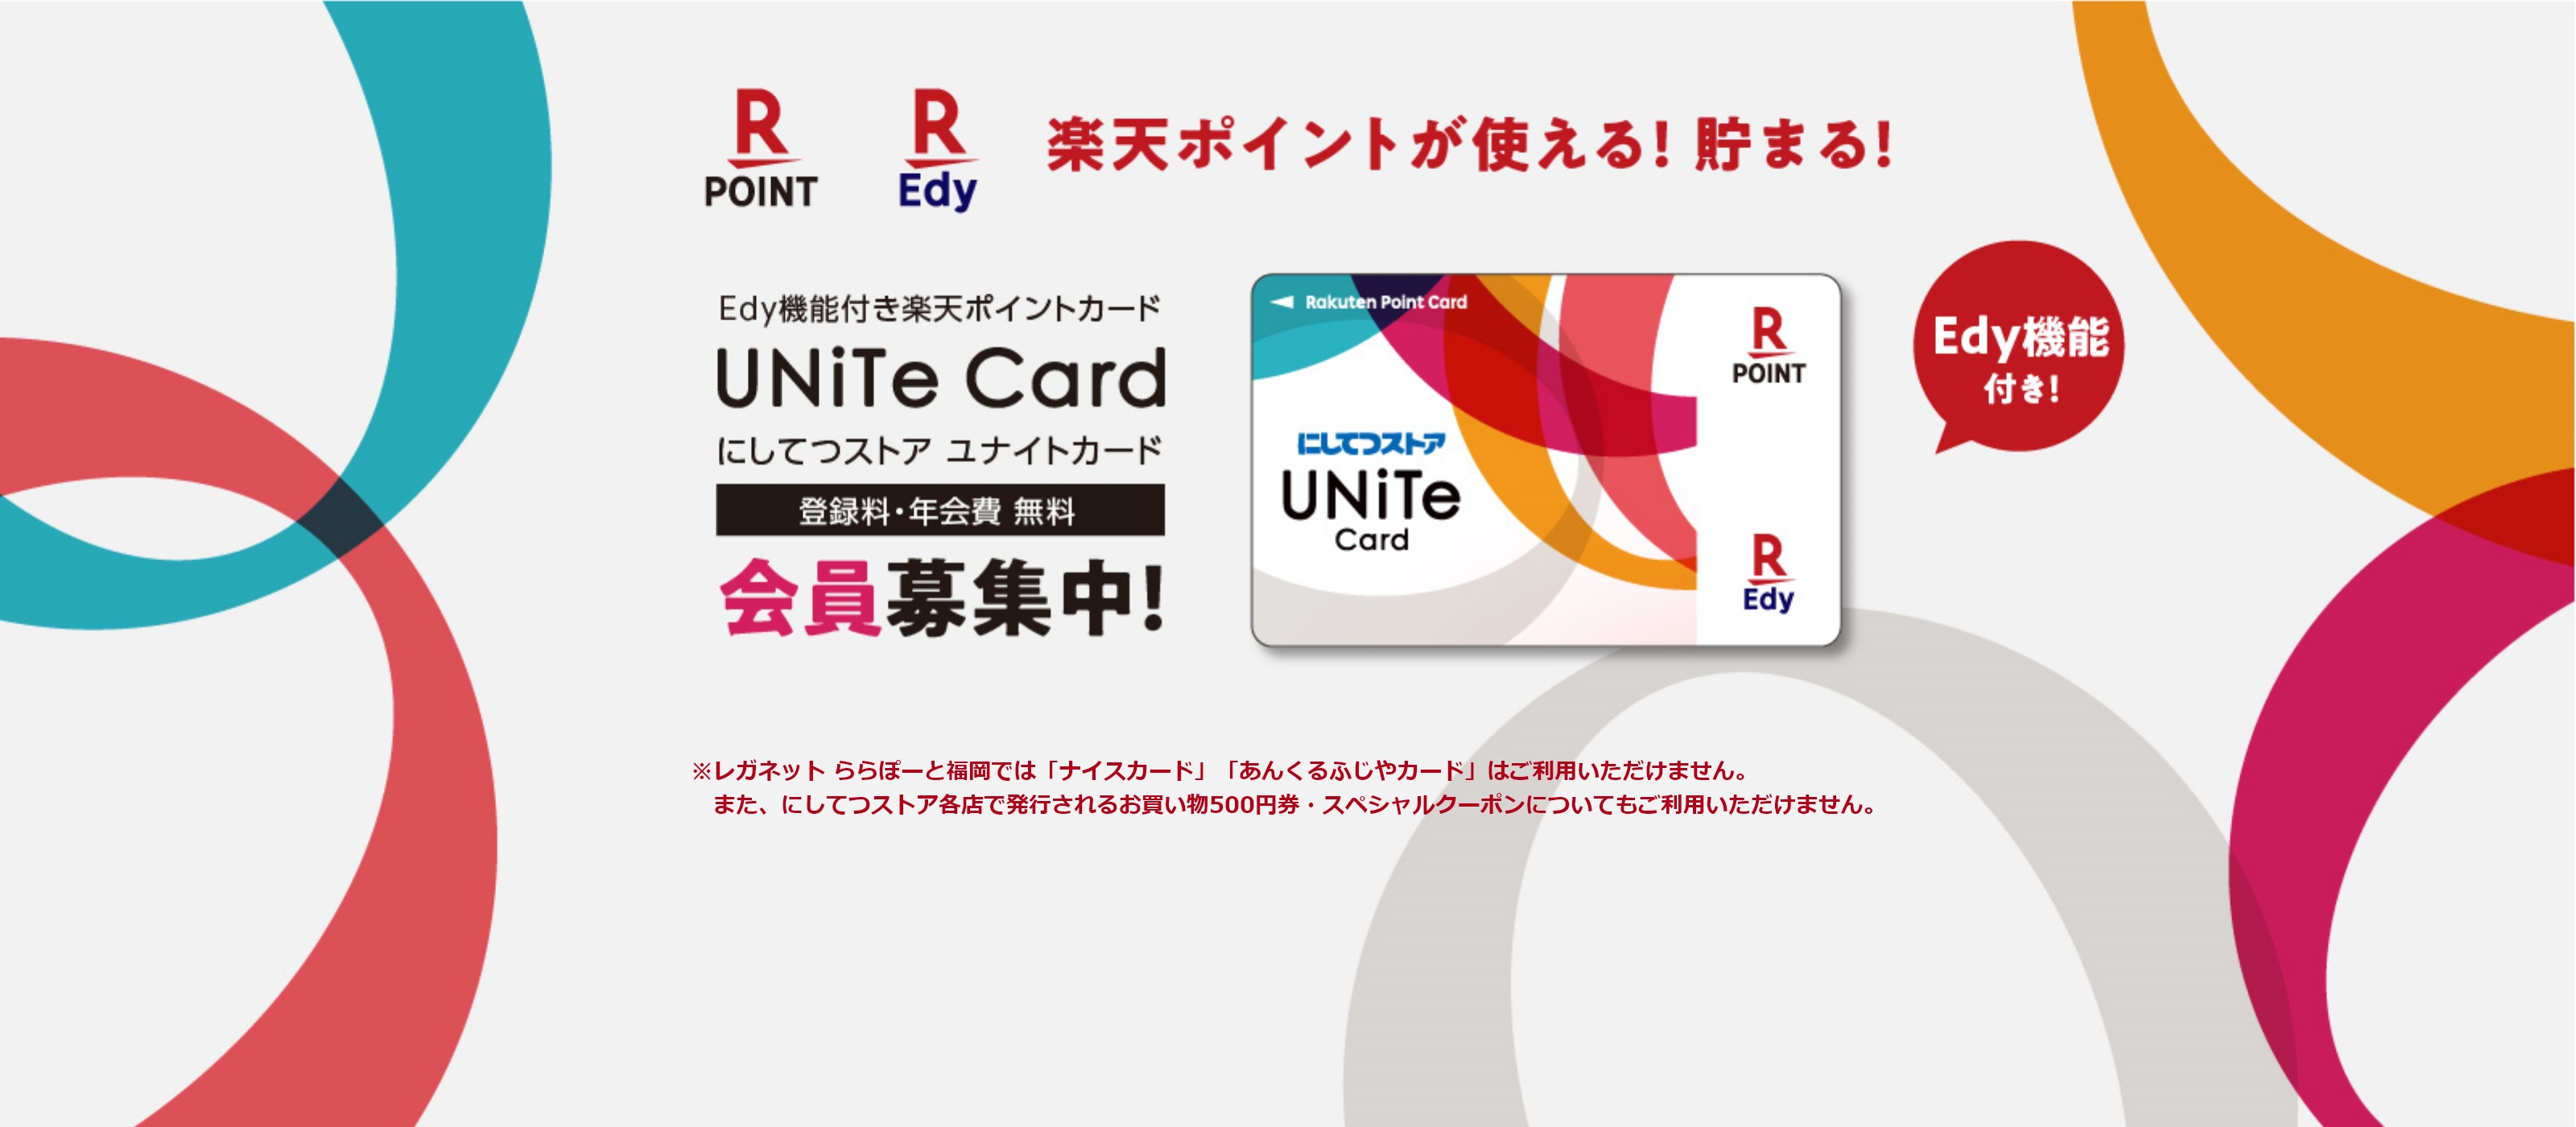 Edy機能付き楽天ポイントカード UNiTe Card にしてつストア ユナイトカード会員募集中！